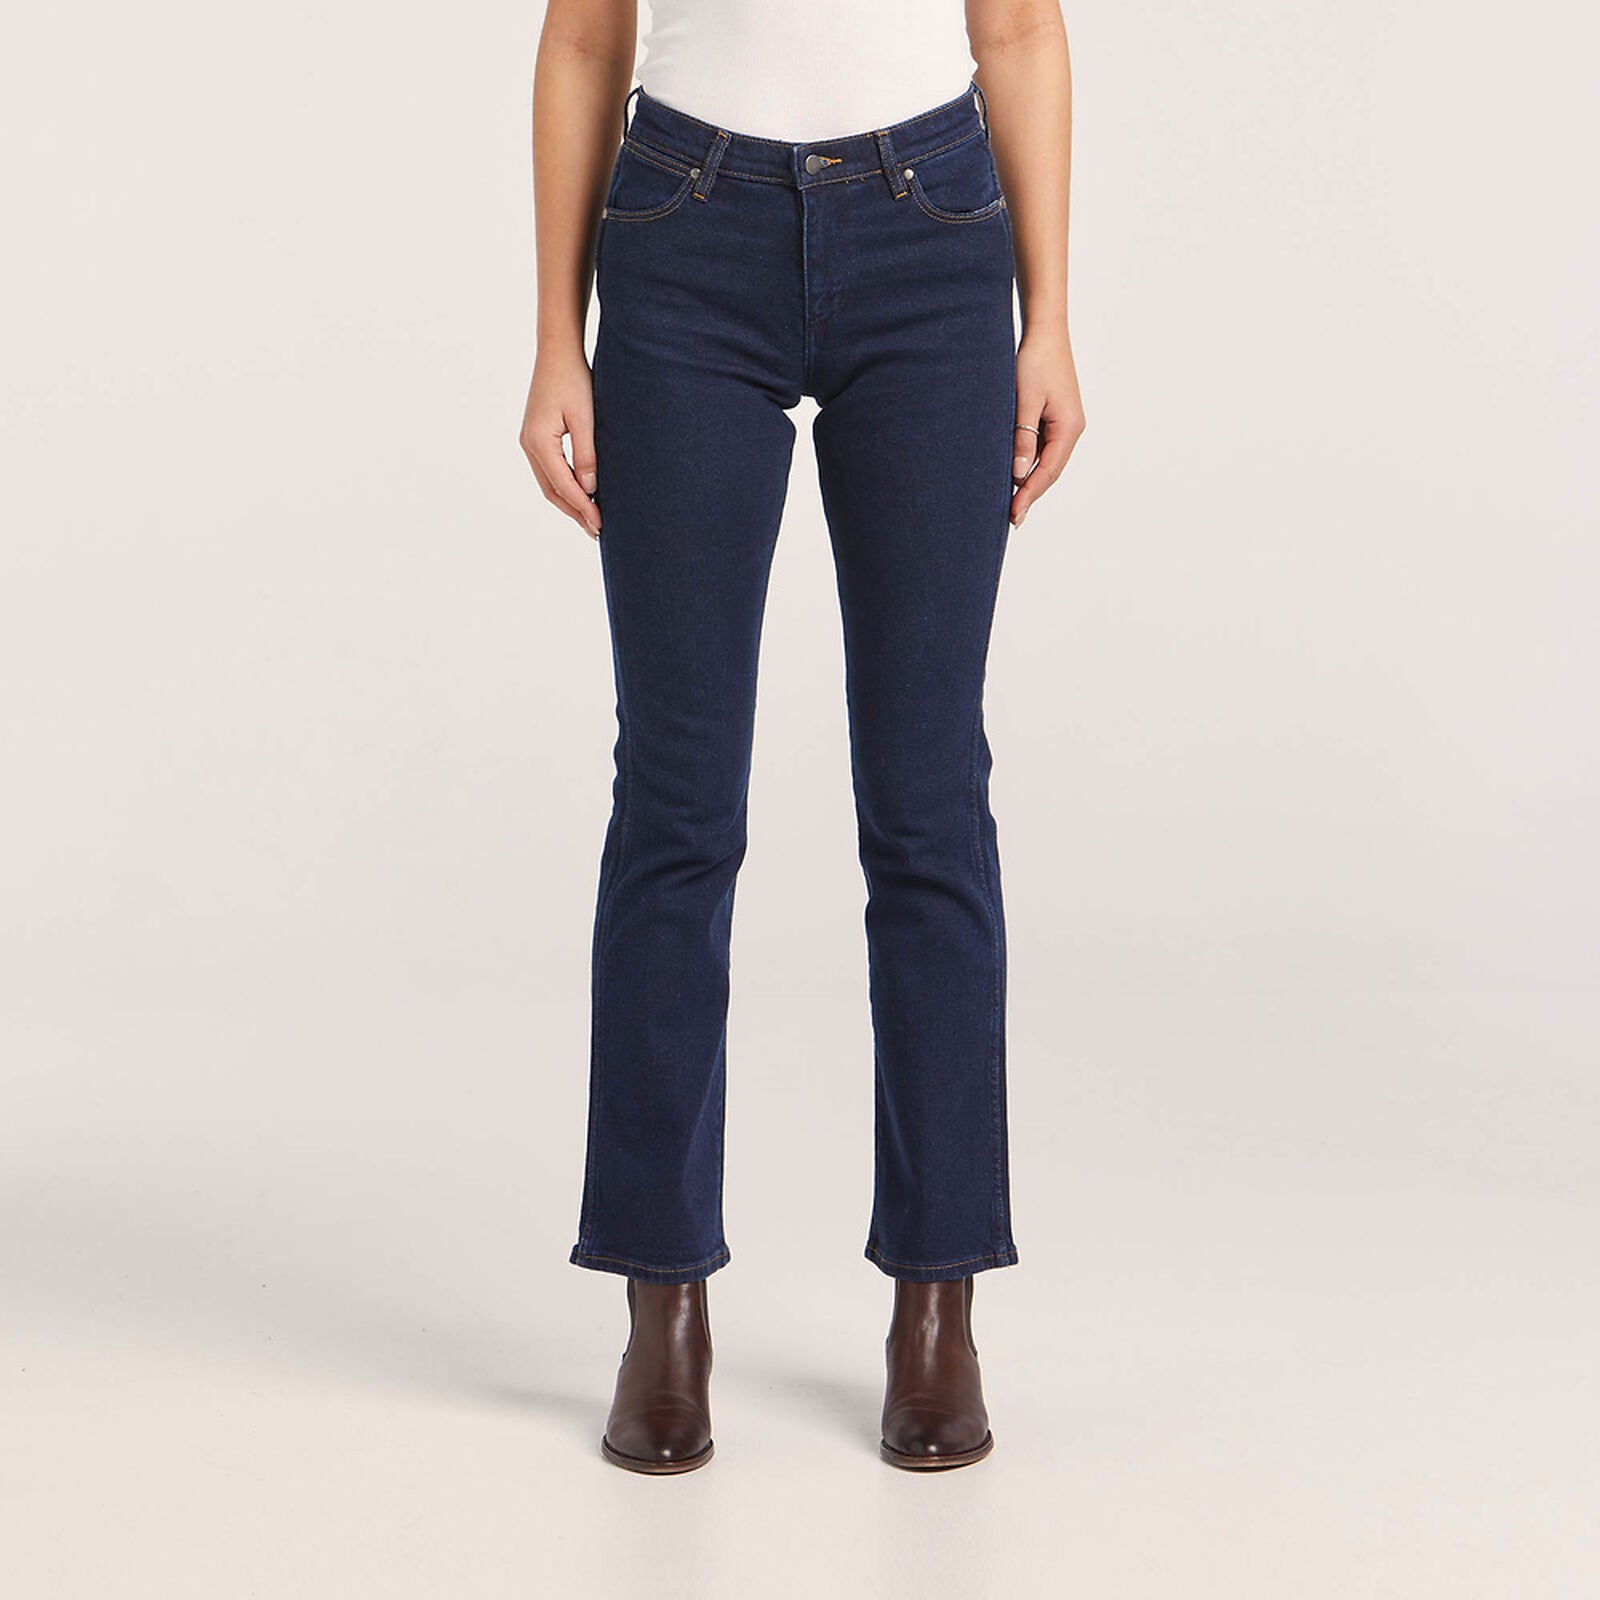 Levi's Women's Wedgie Straight Jeans - Medium Indigo $ 79.5